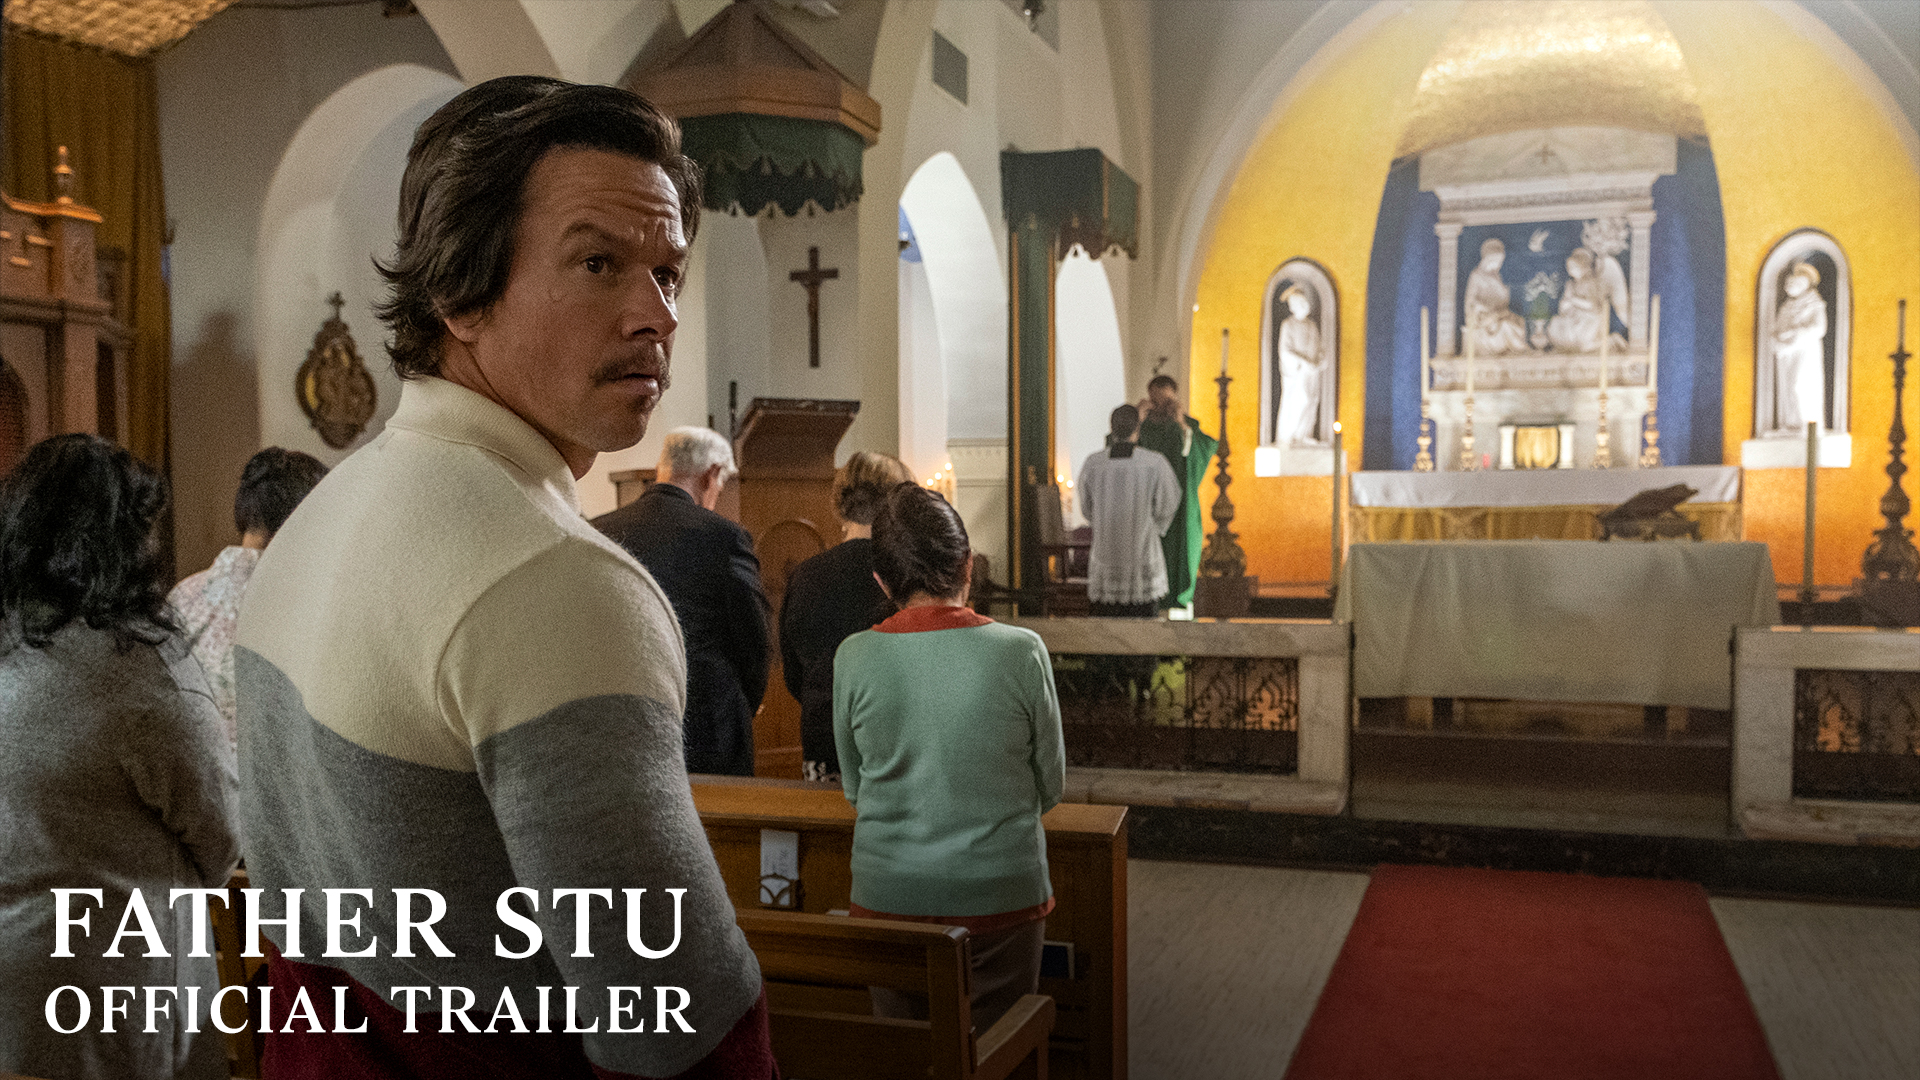 teaser image - Father Stu Official Trailer